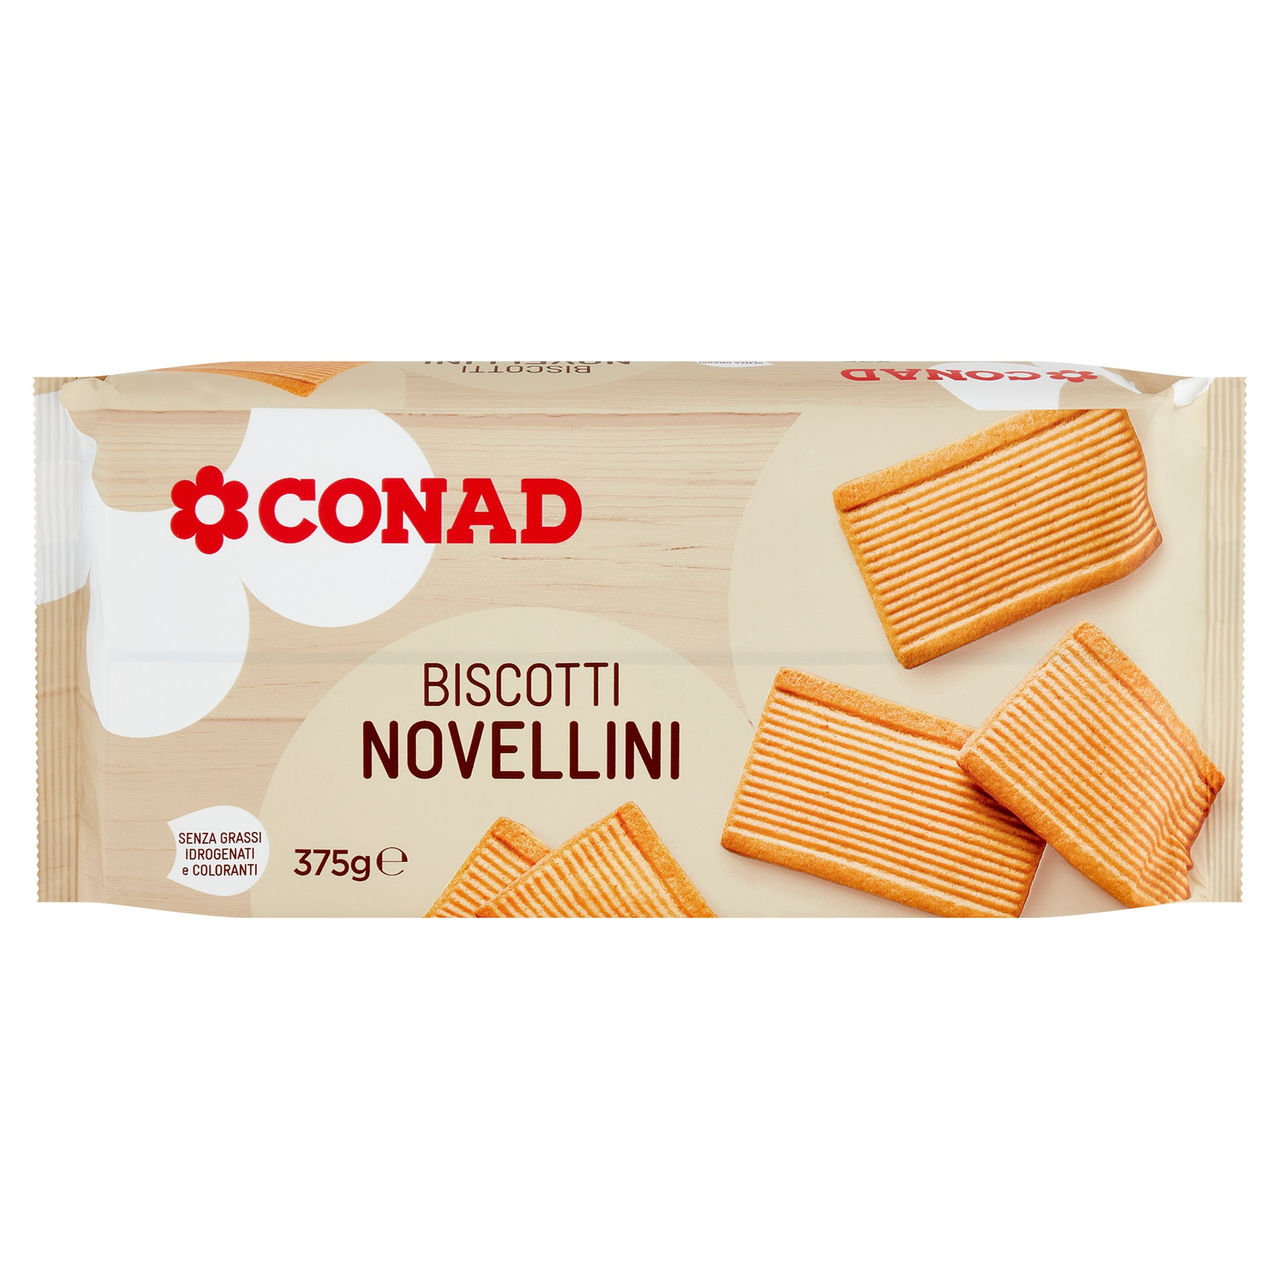 Biscotti Novellini g. 375 Conad online